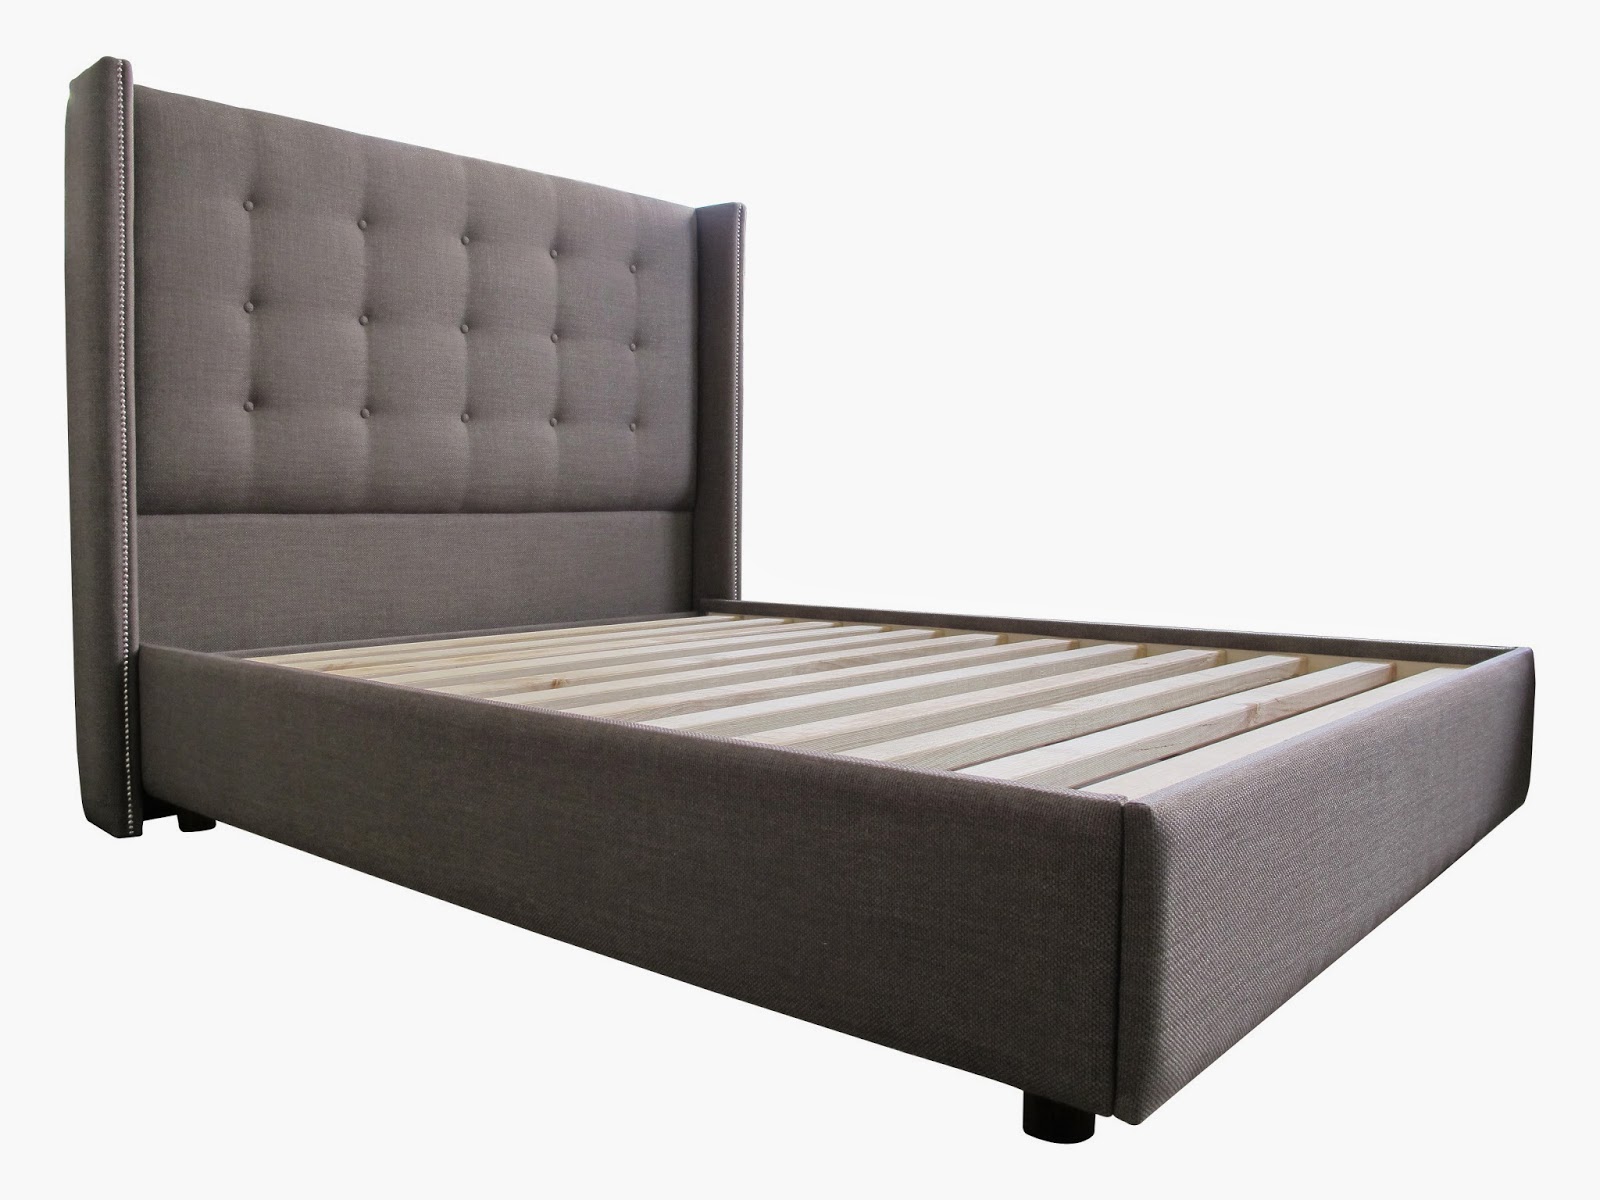 Bed Head Design Complete Bed Bases